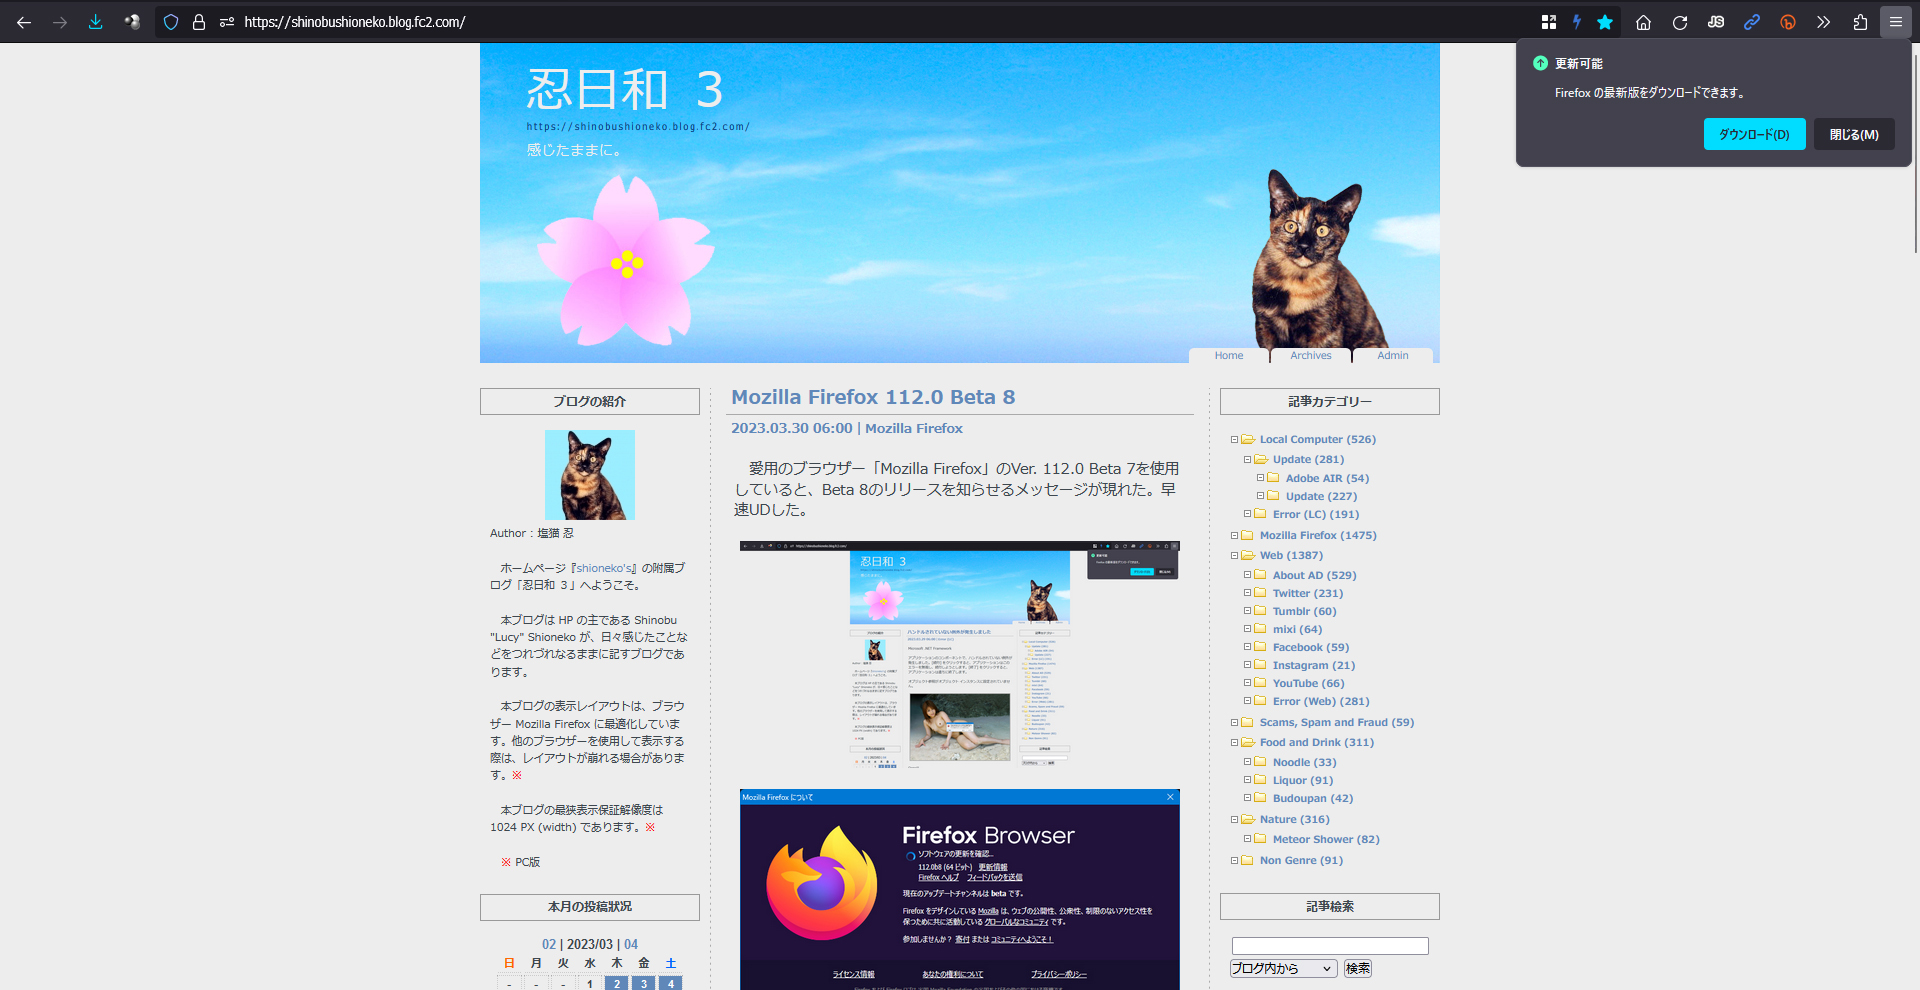 Mozilla Firefox 112.0 Beta 9